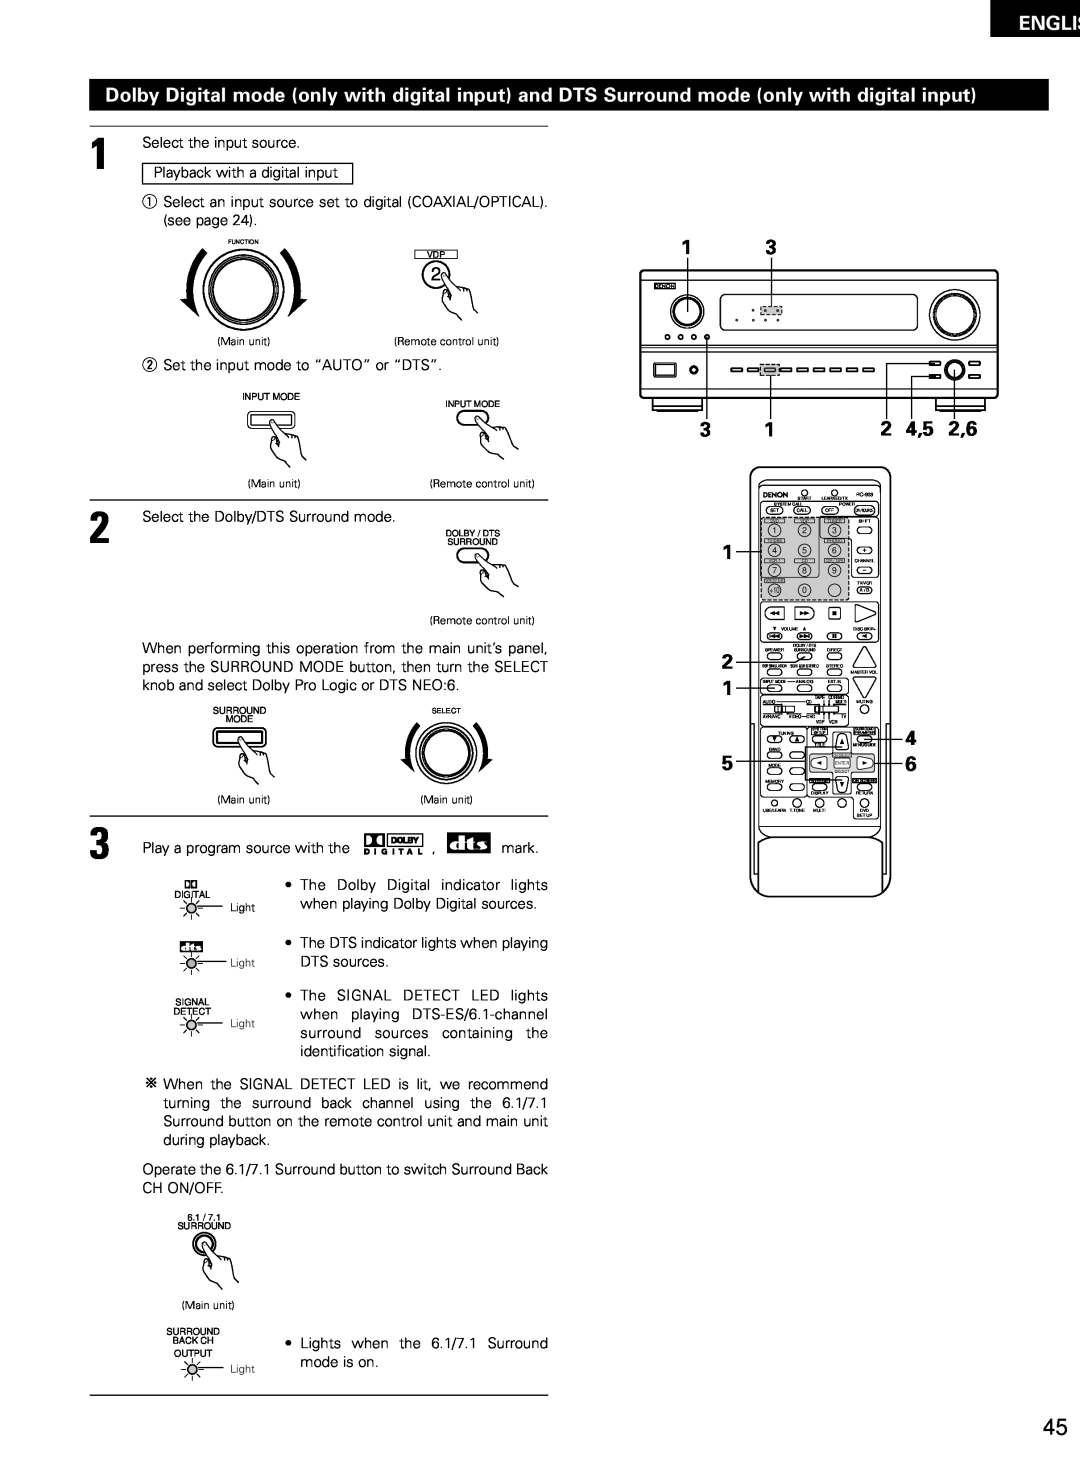 Denon AVR-2802/982 operating instructions 